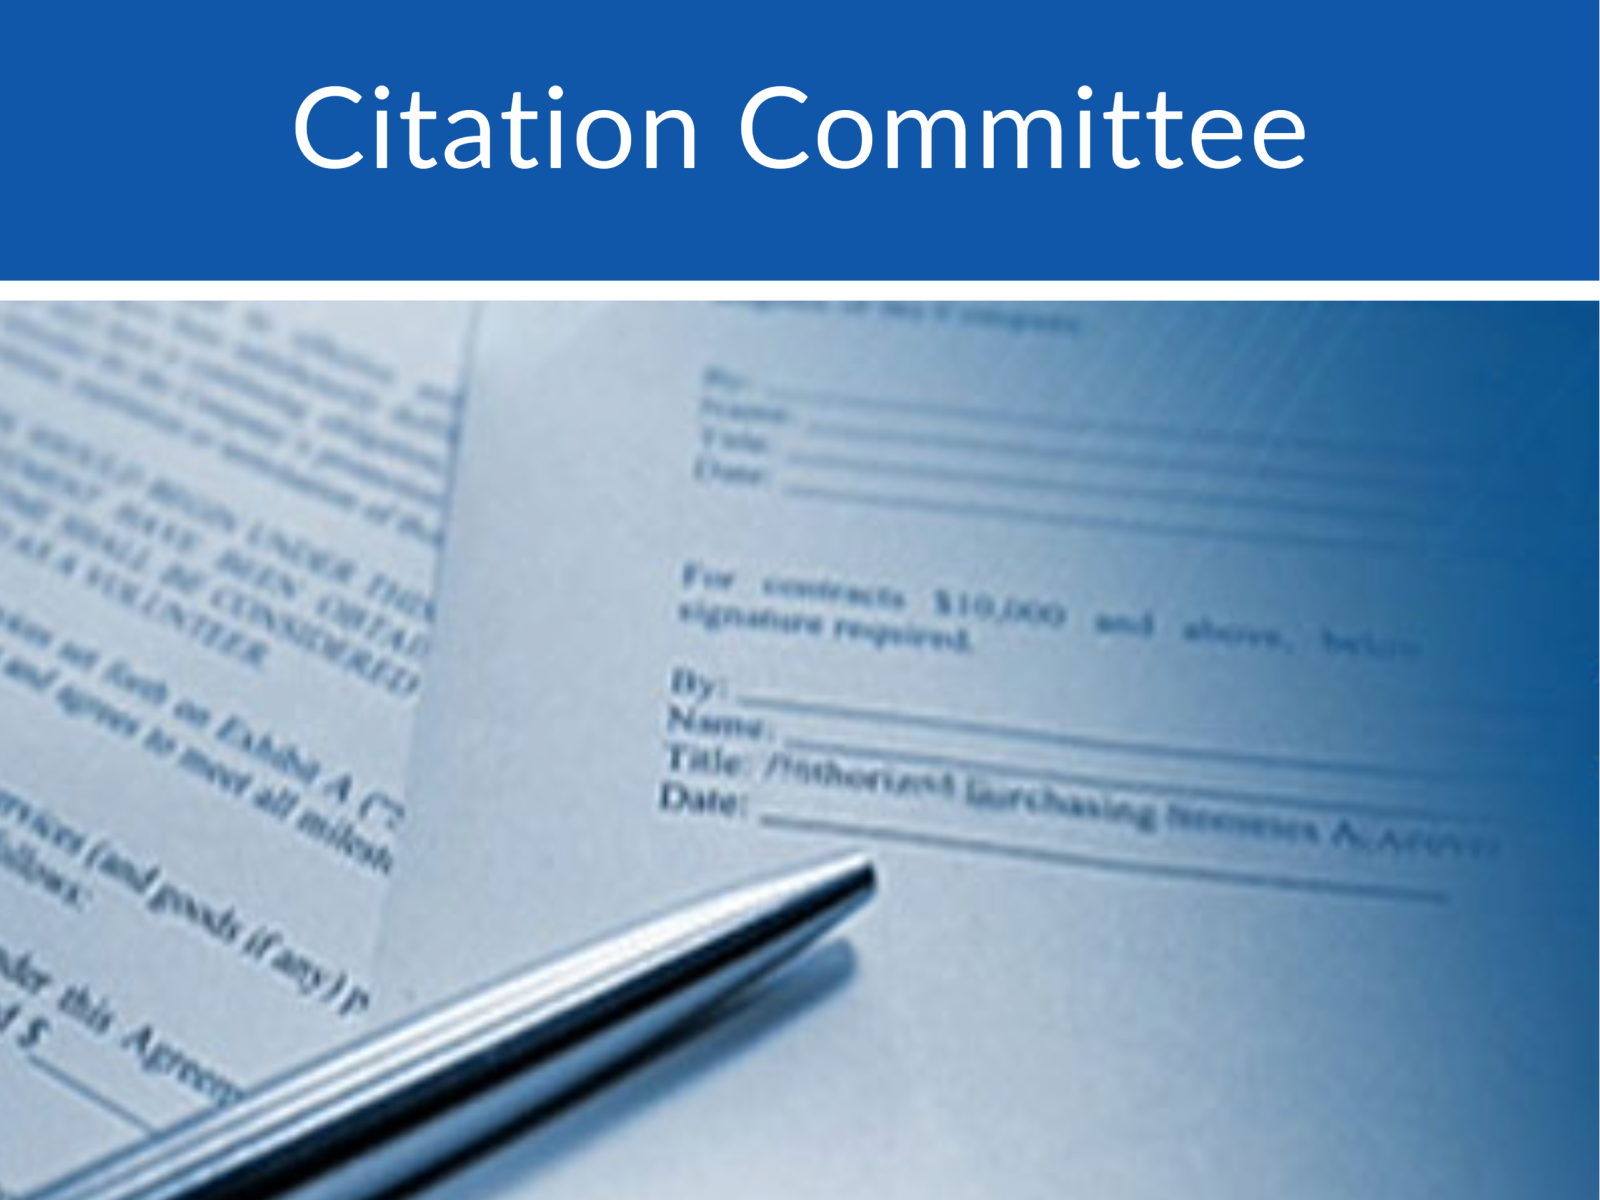 Citation Committee